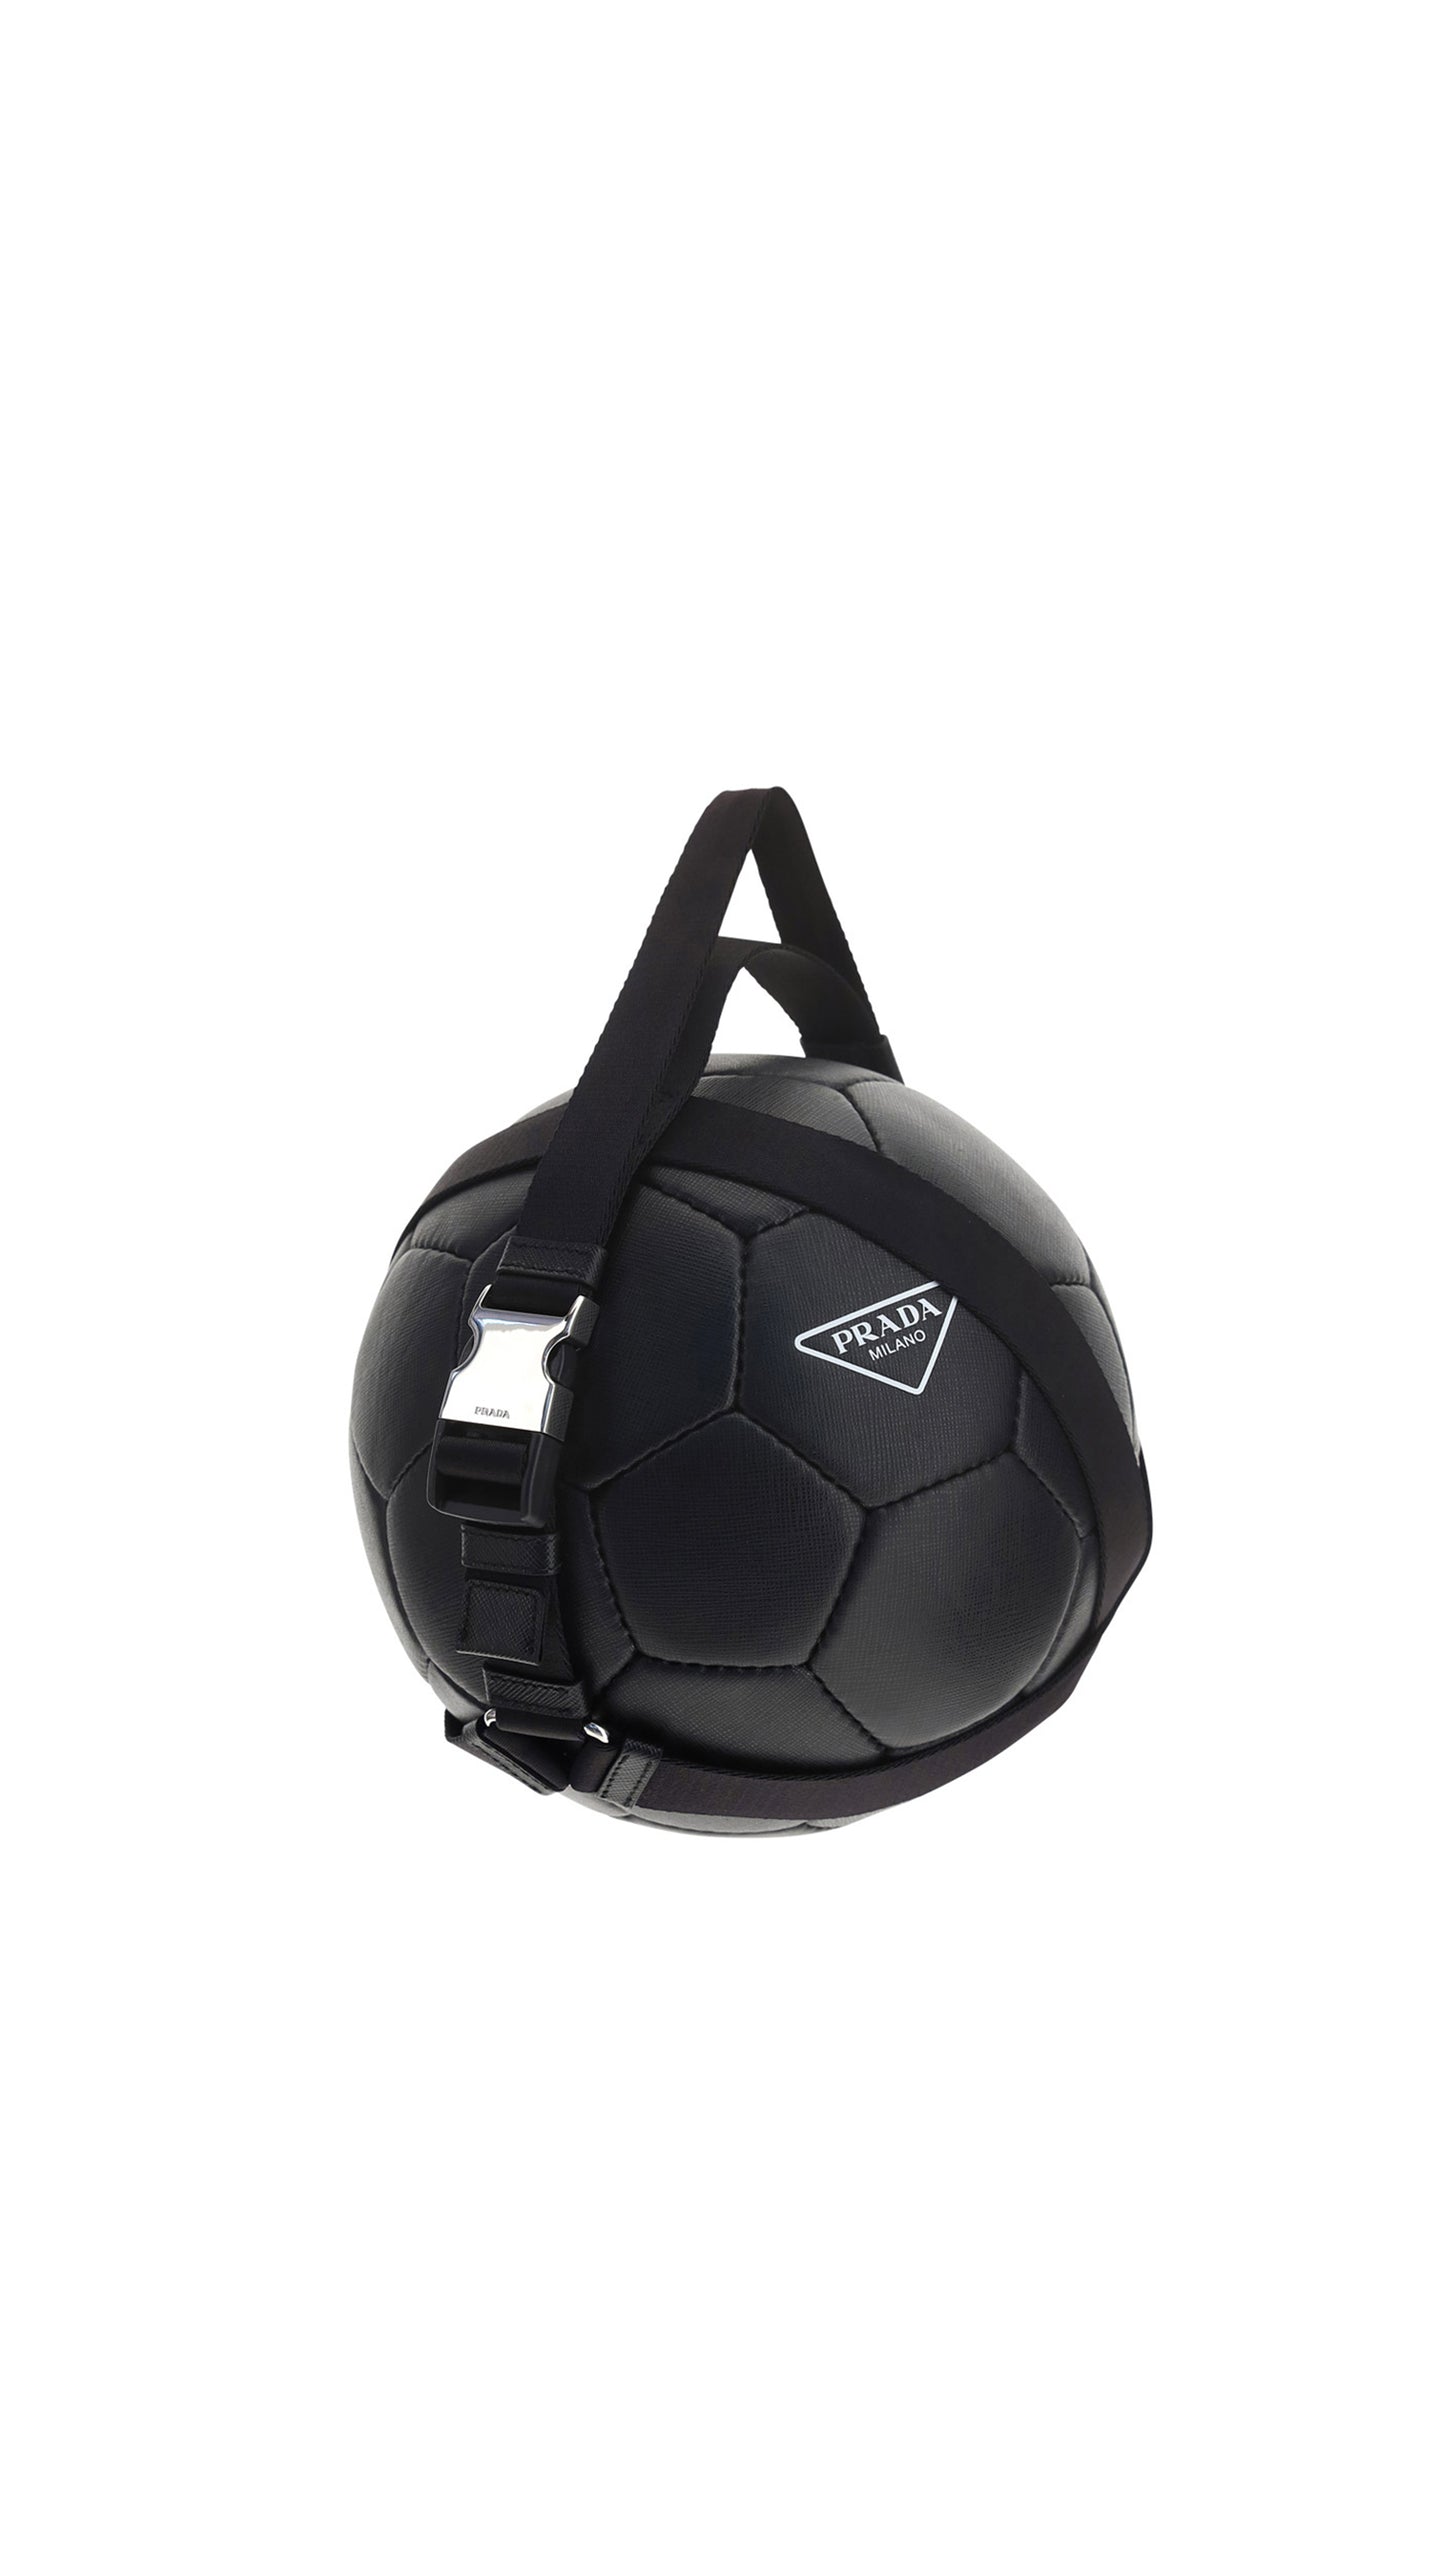 Saffiano Leather Soccer Ball - Black